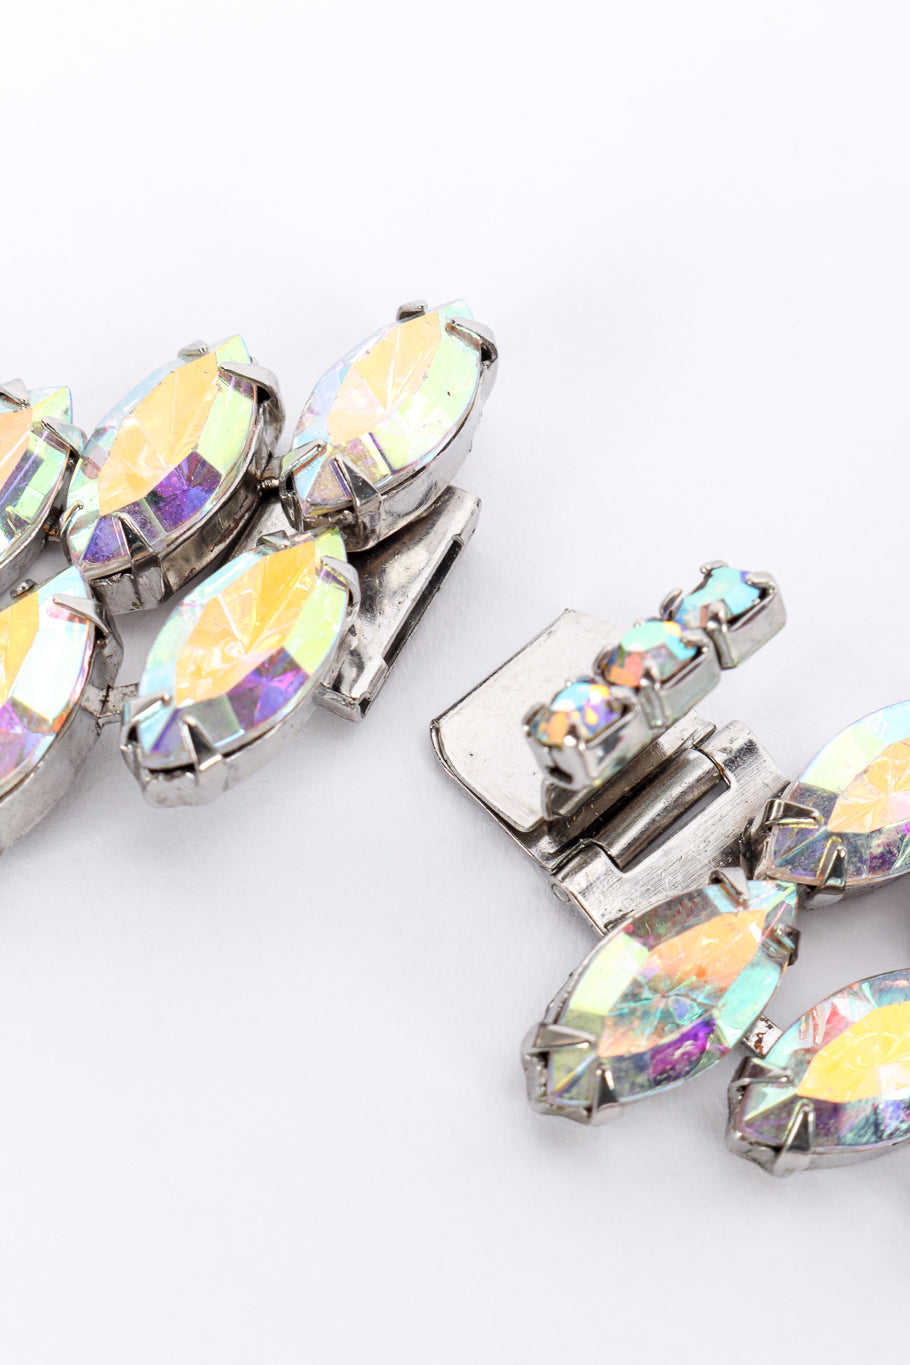 Vintage Kirks Folly Aurora Crystal Marquise Collar Necklace tab closure unfastened closeup @recessla